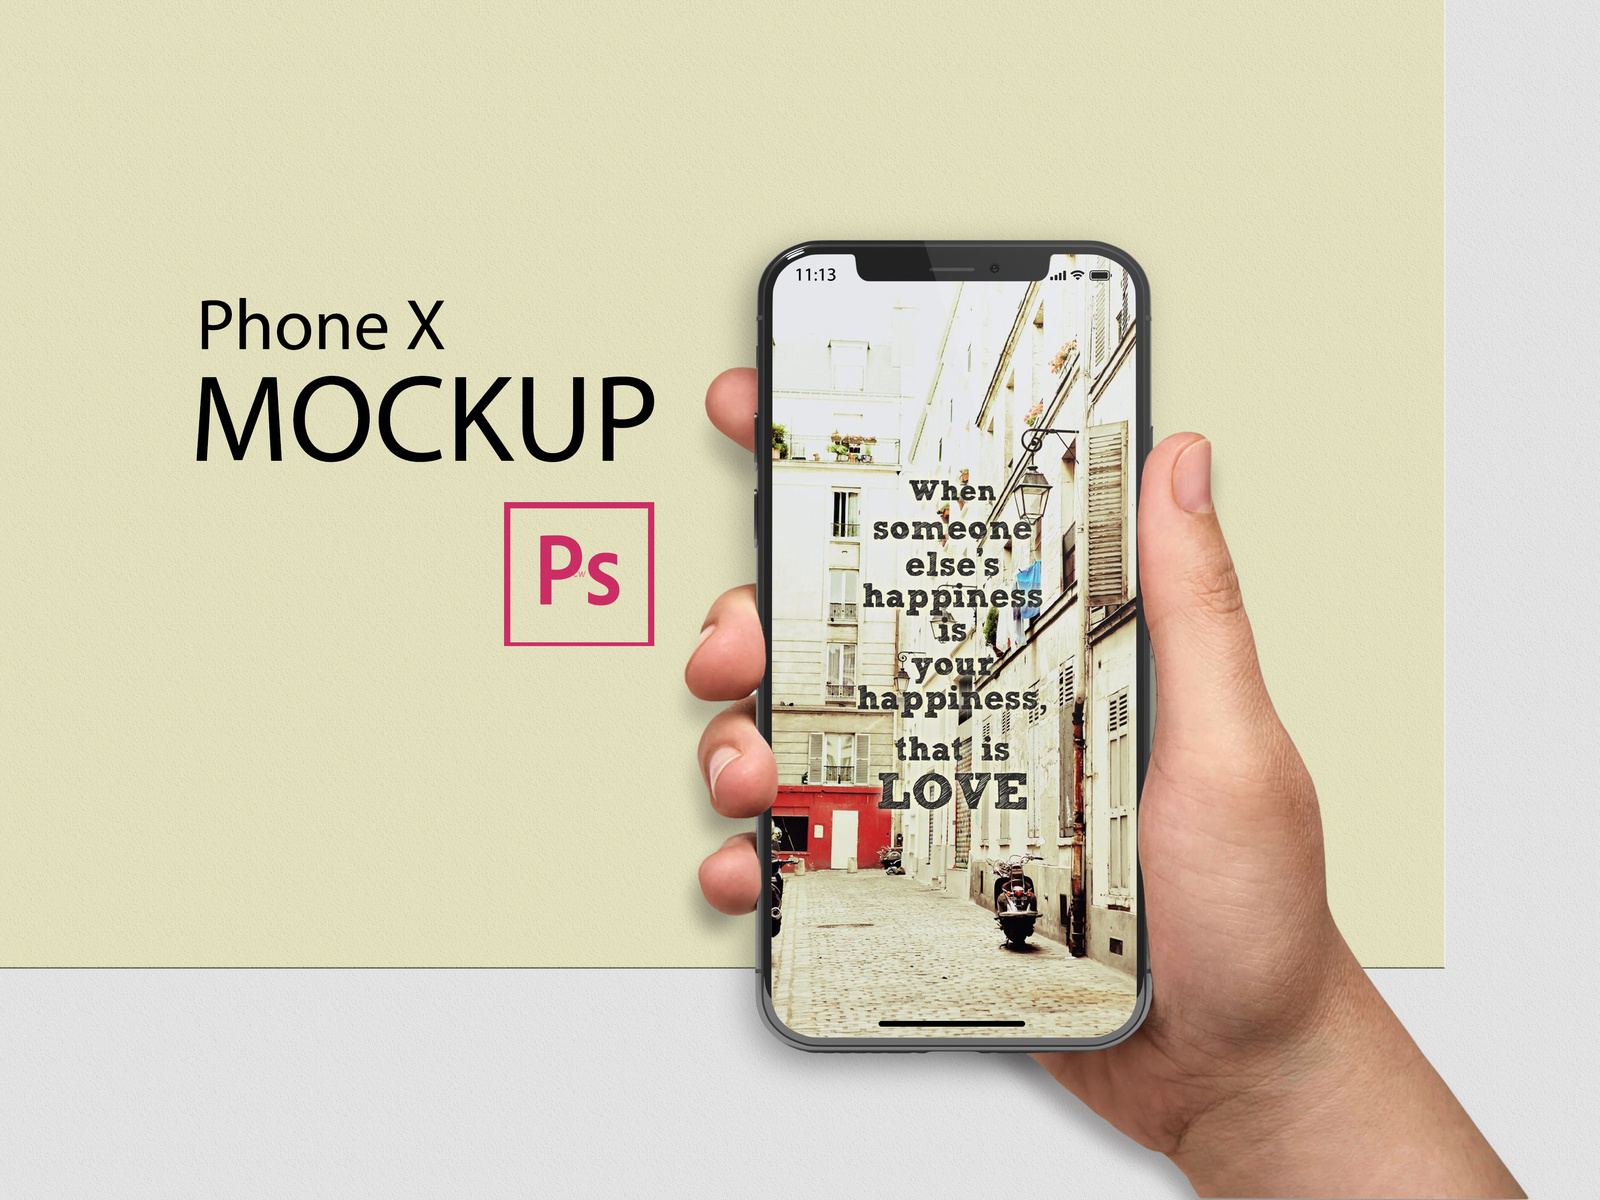 Download 40 Best Free iPhone Mockups of 2019 | Free Mockups, Best ...